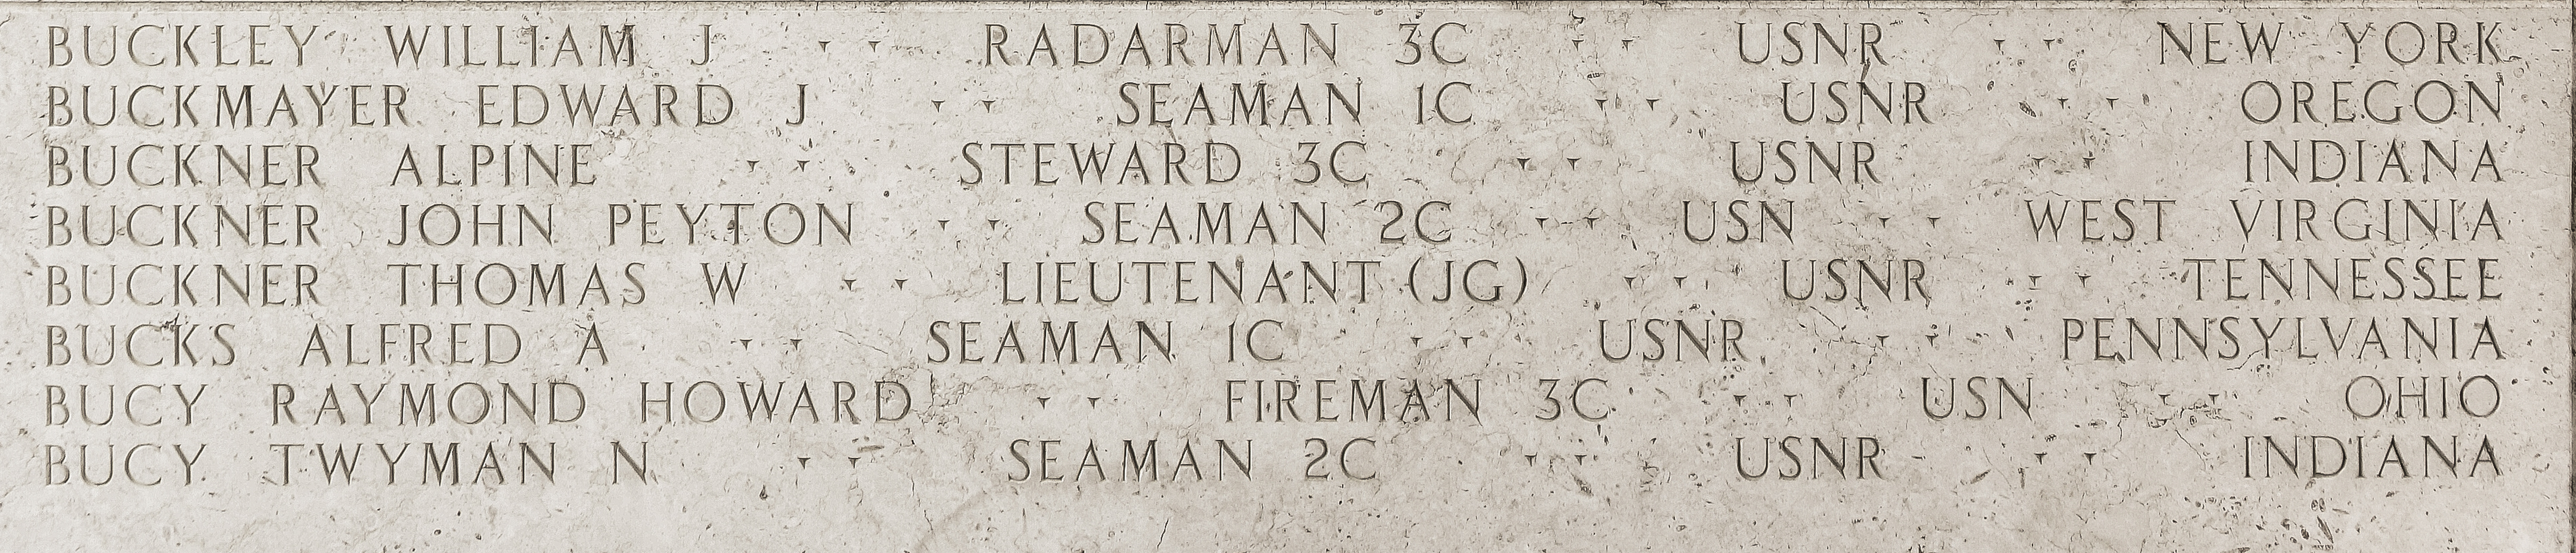 William J. Buckley, Radarman Third Class